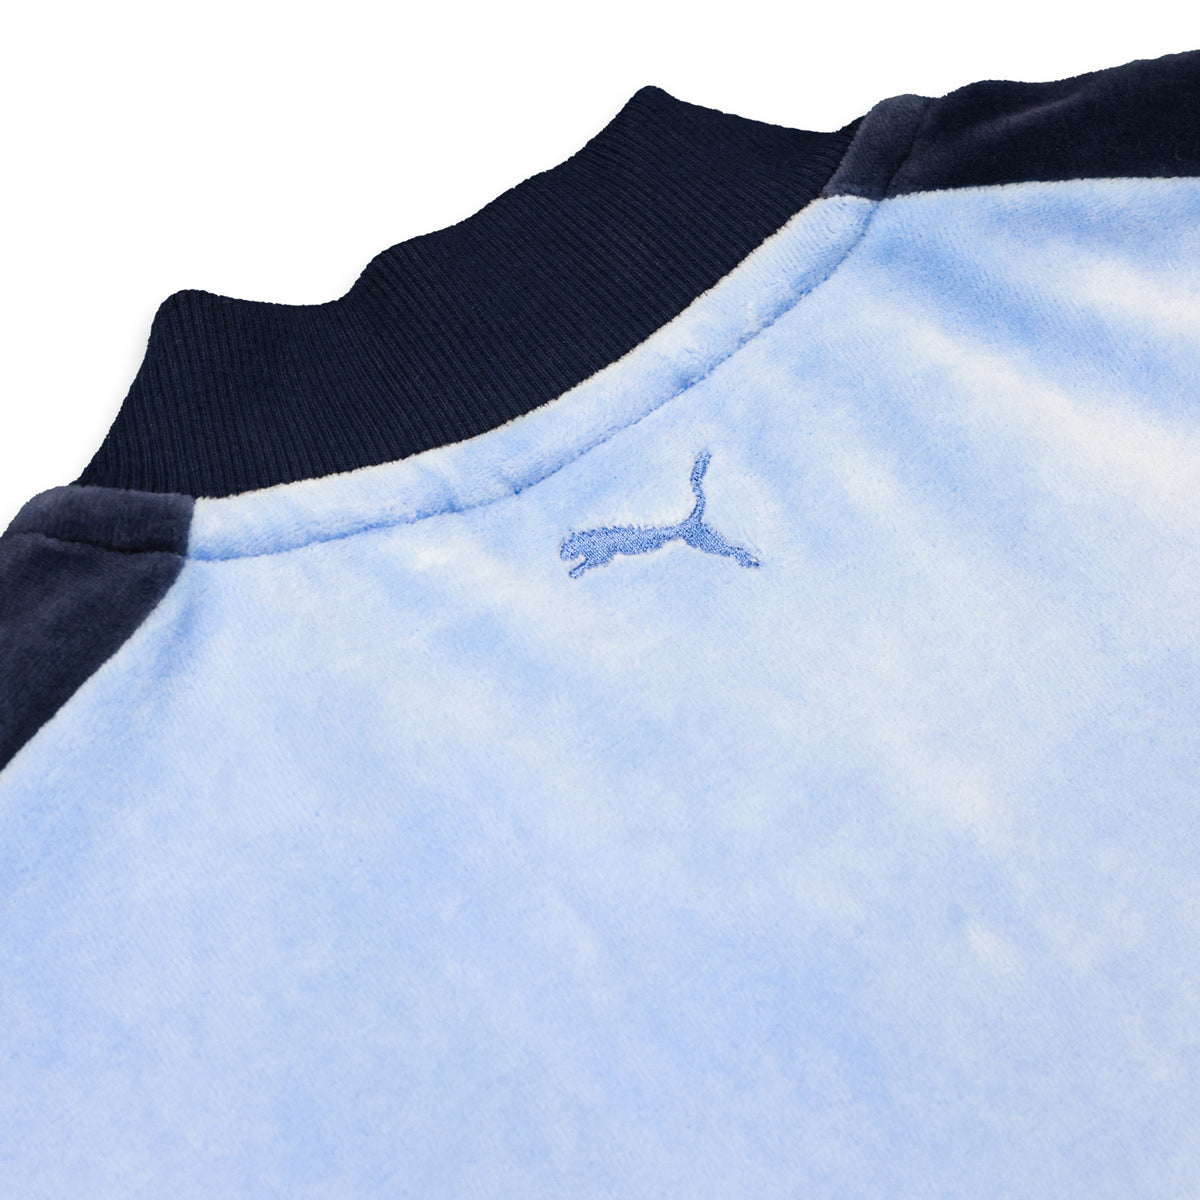 PUMA x TMC Hussle Way (All-Star) Jacket - Back Detail